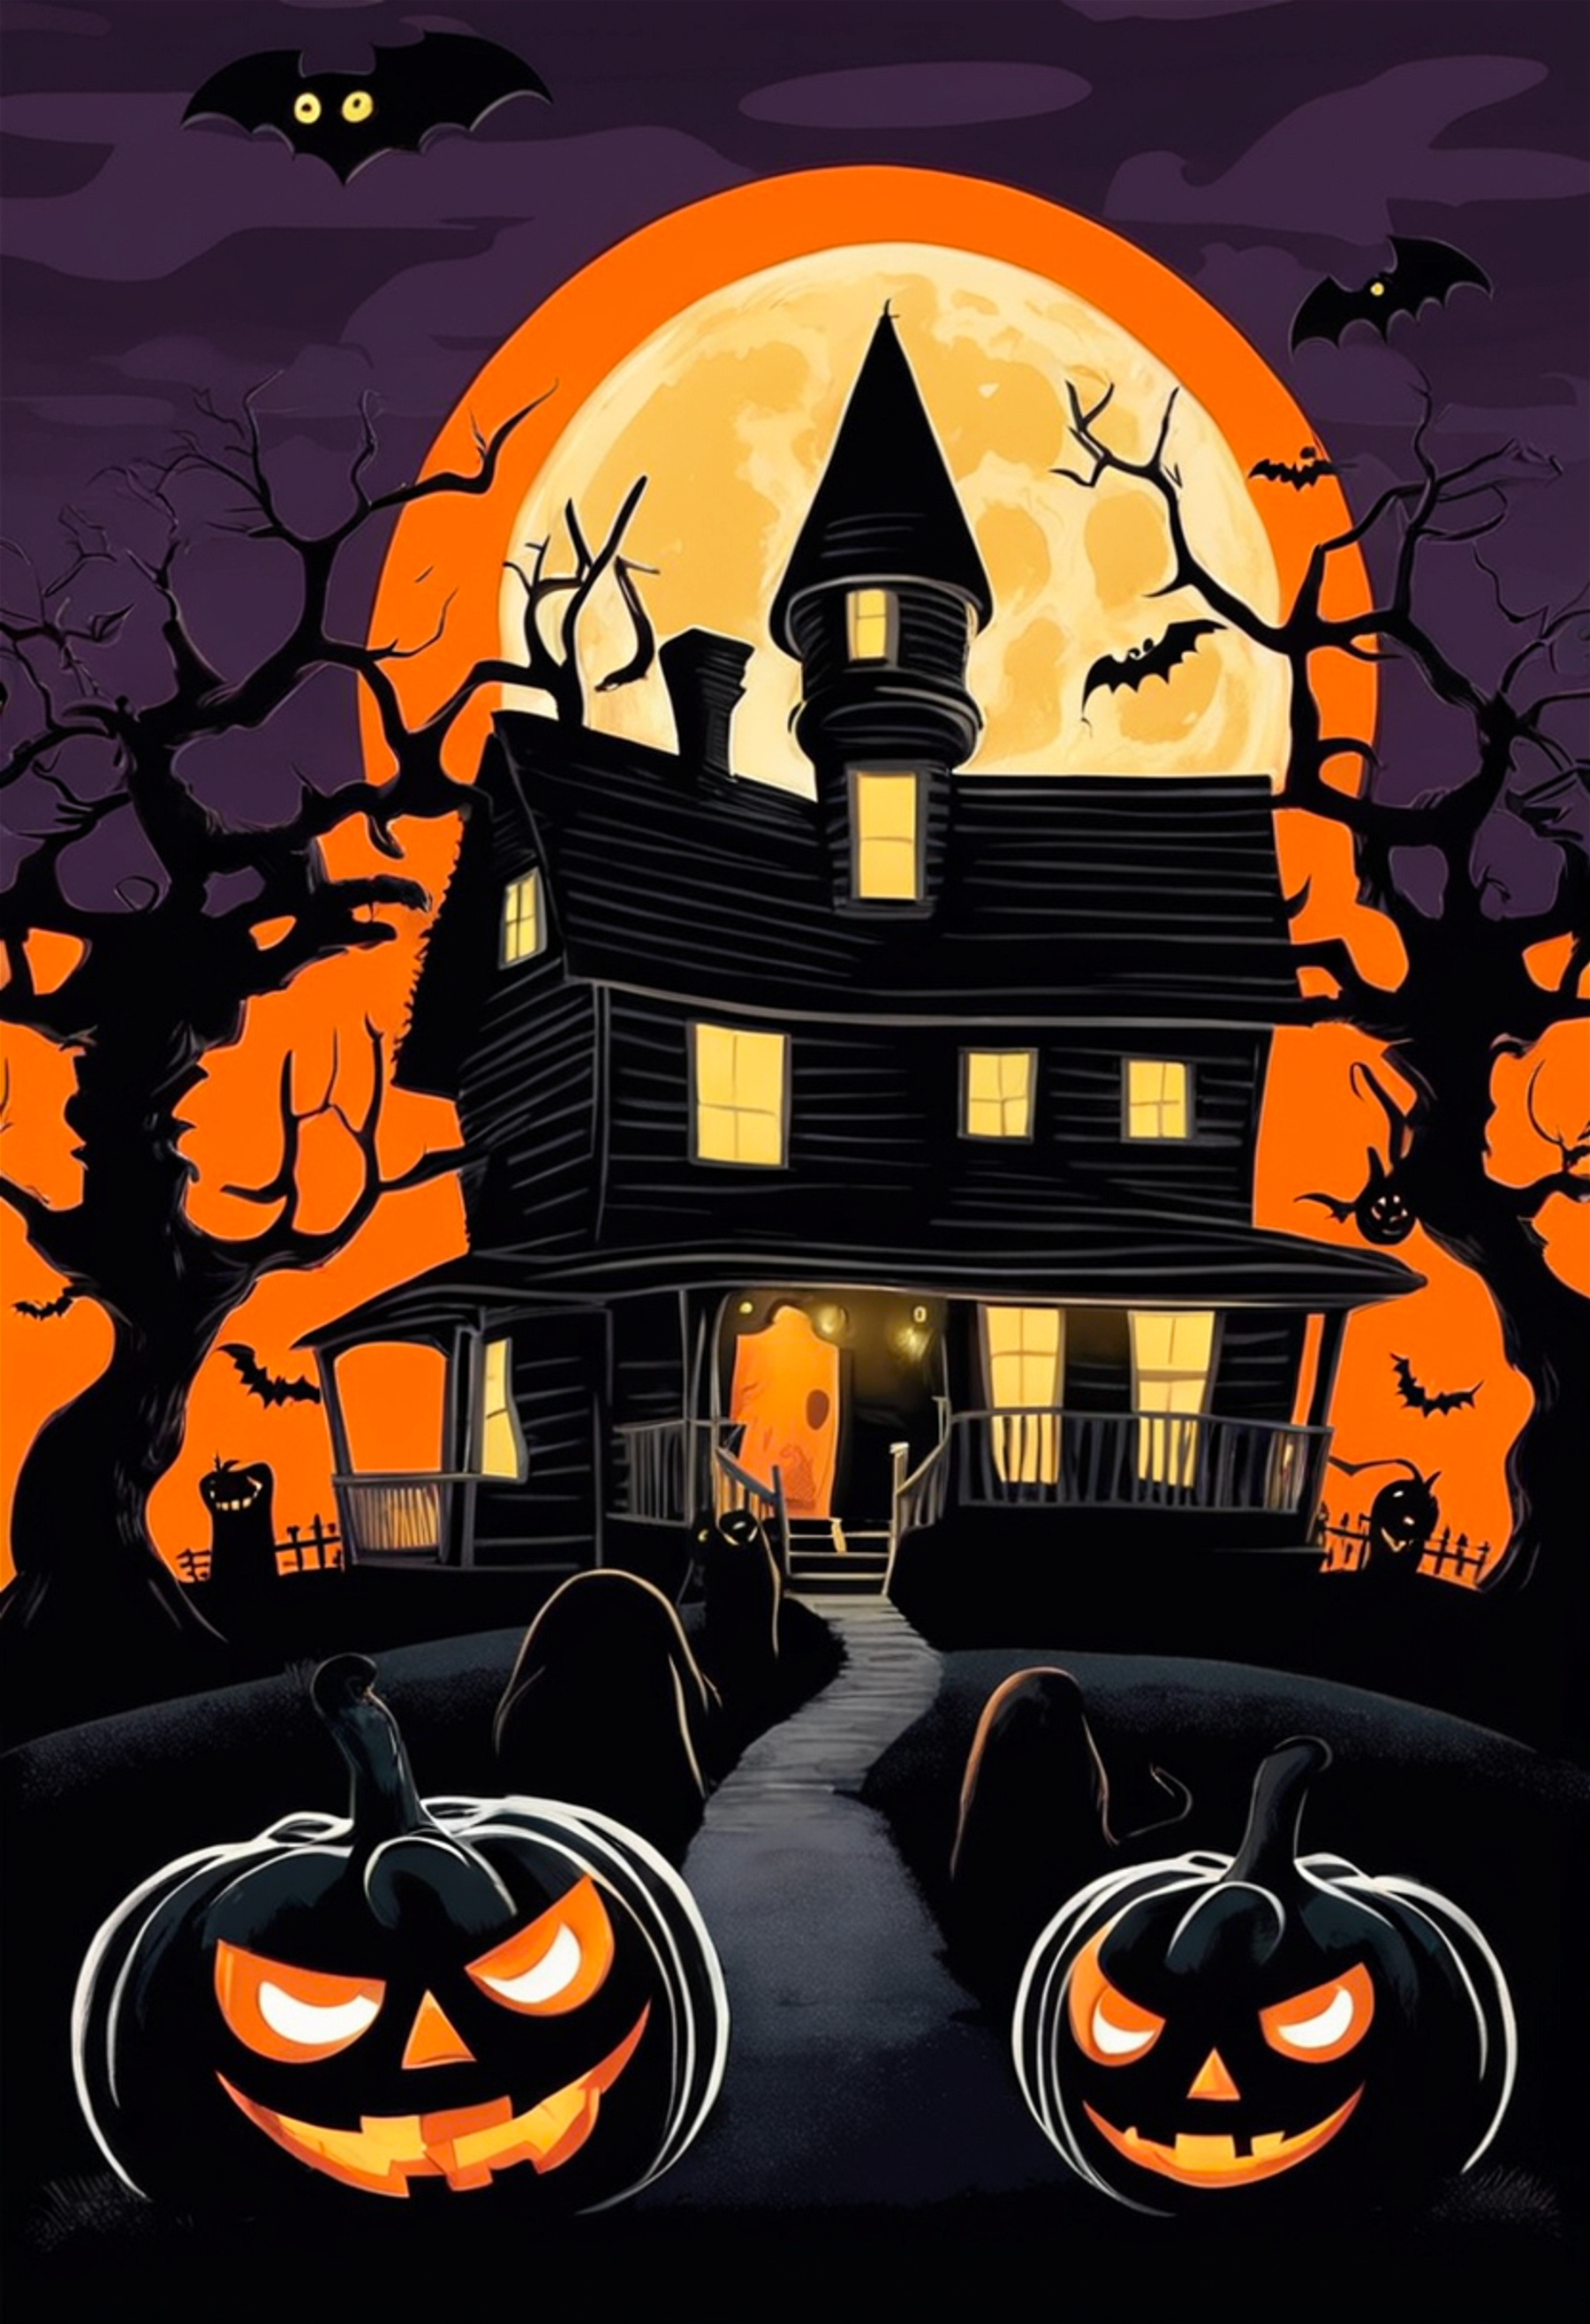 Halloween poster by Tim Burton